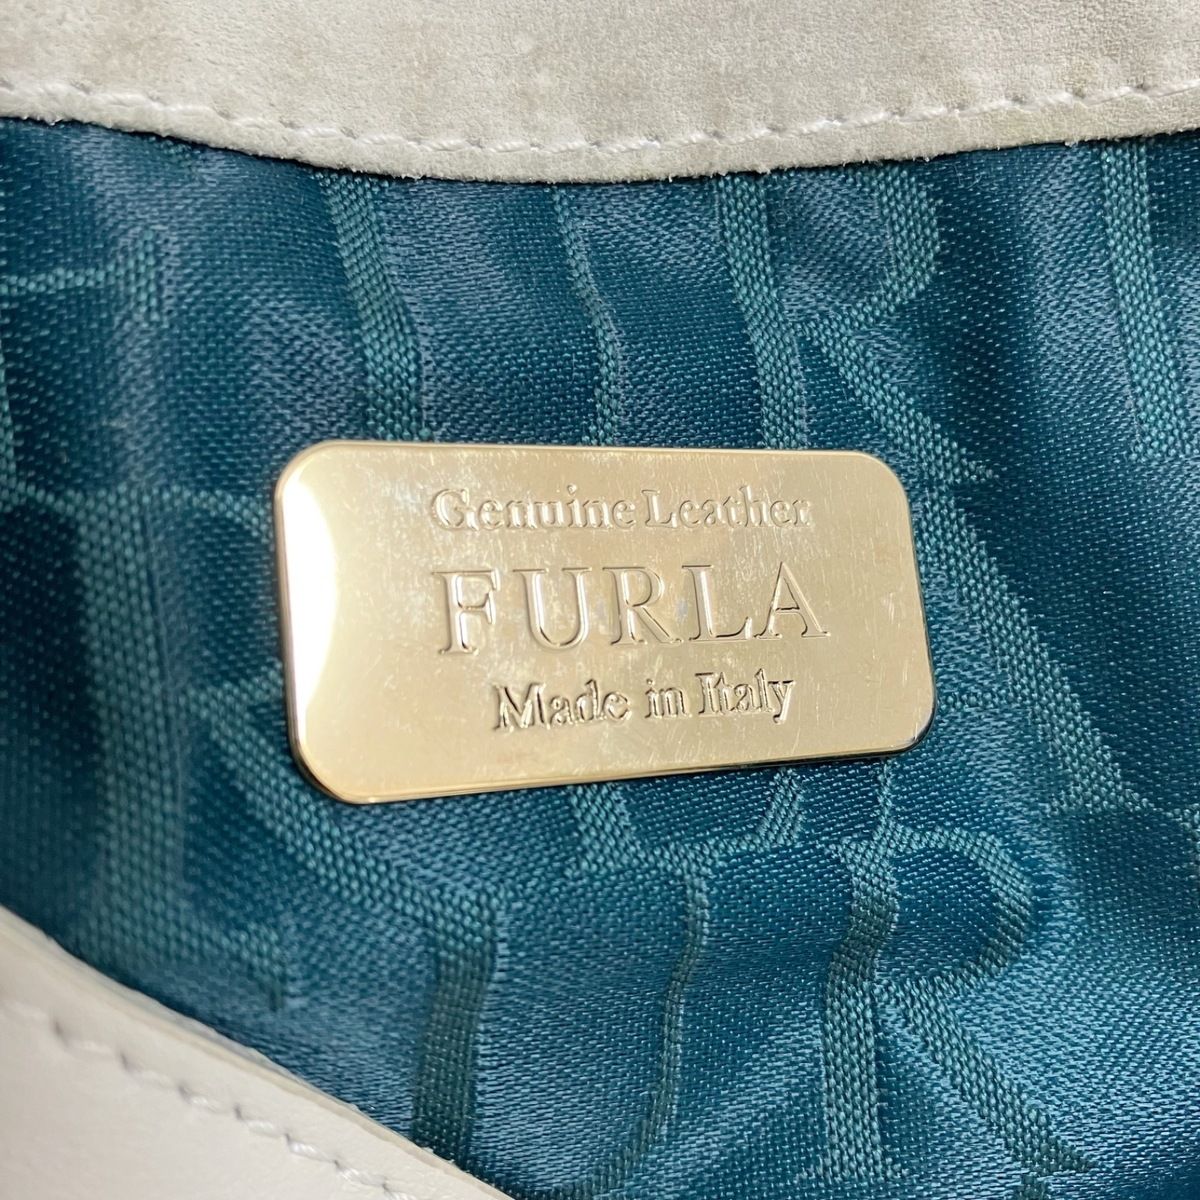 FURLA(フルラ) ショルダーバッグ - 黒×白 ストラップ着脱可 レザー